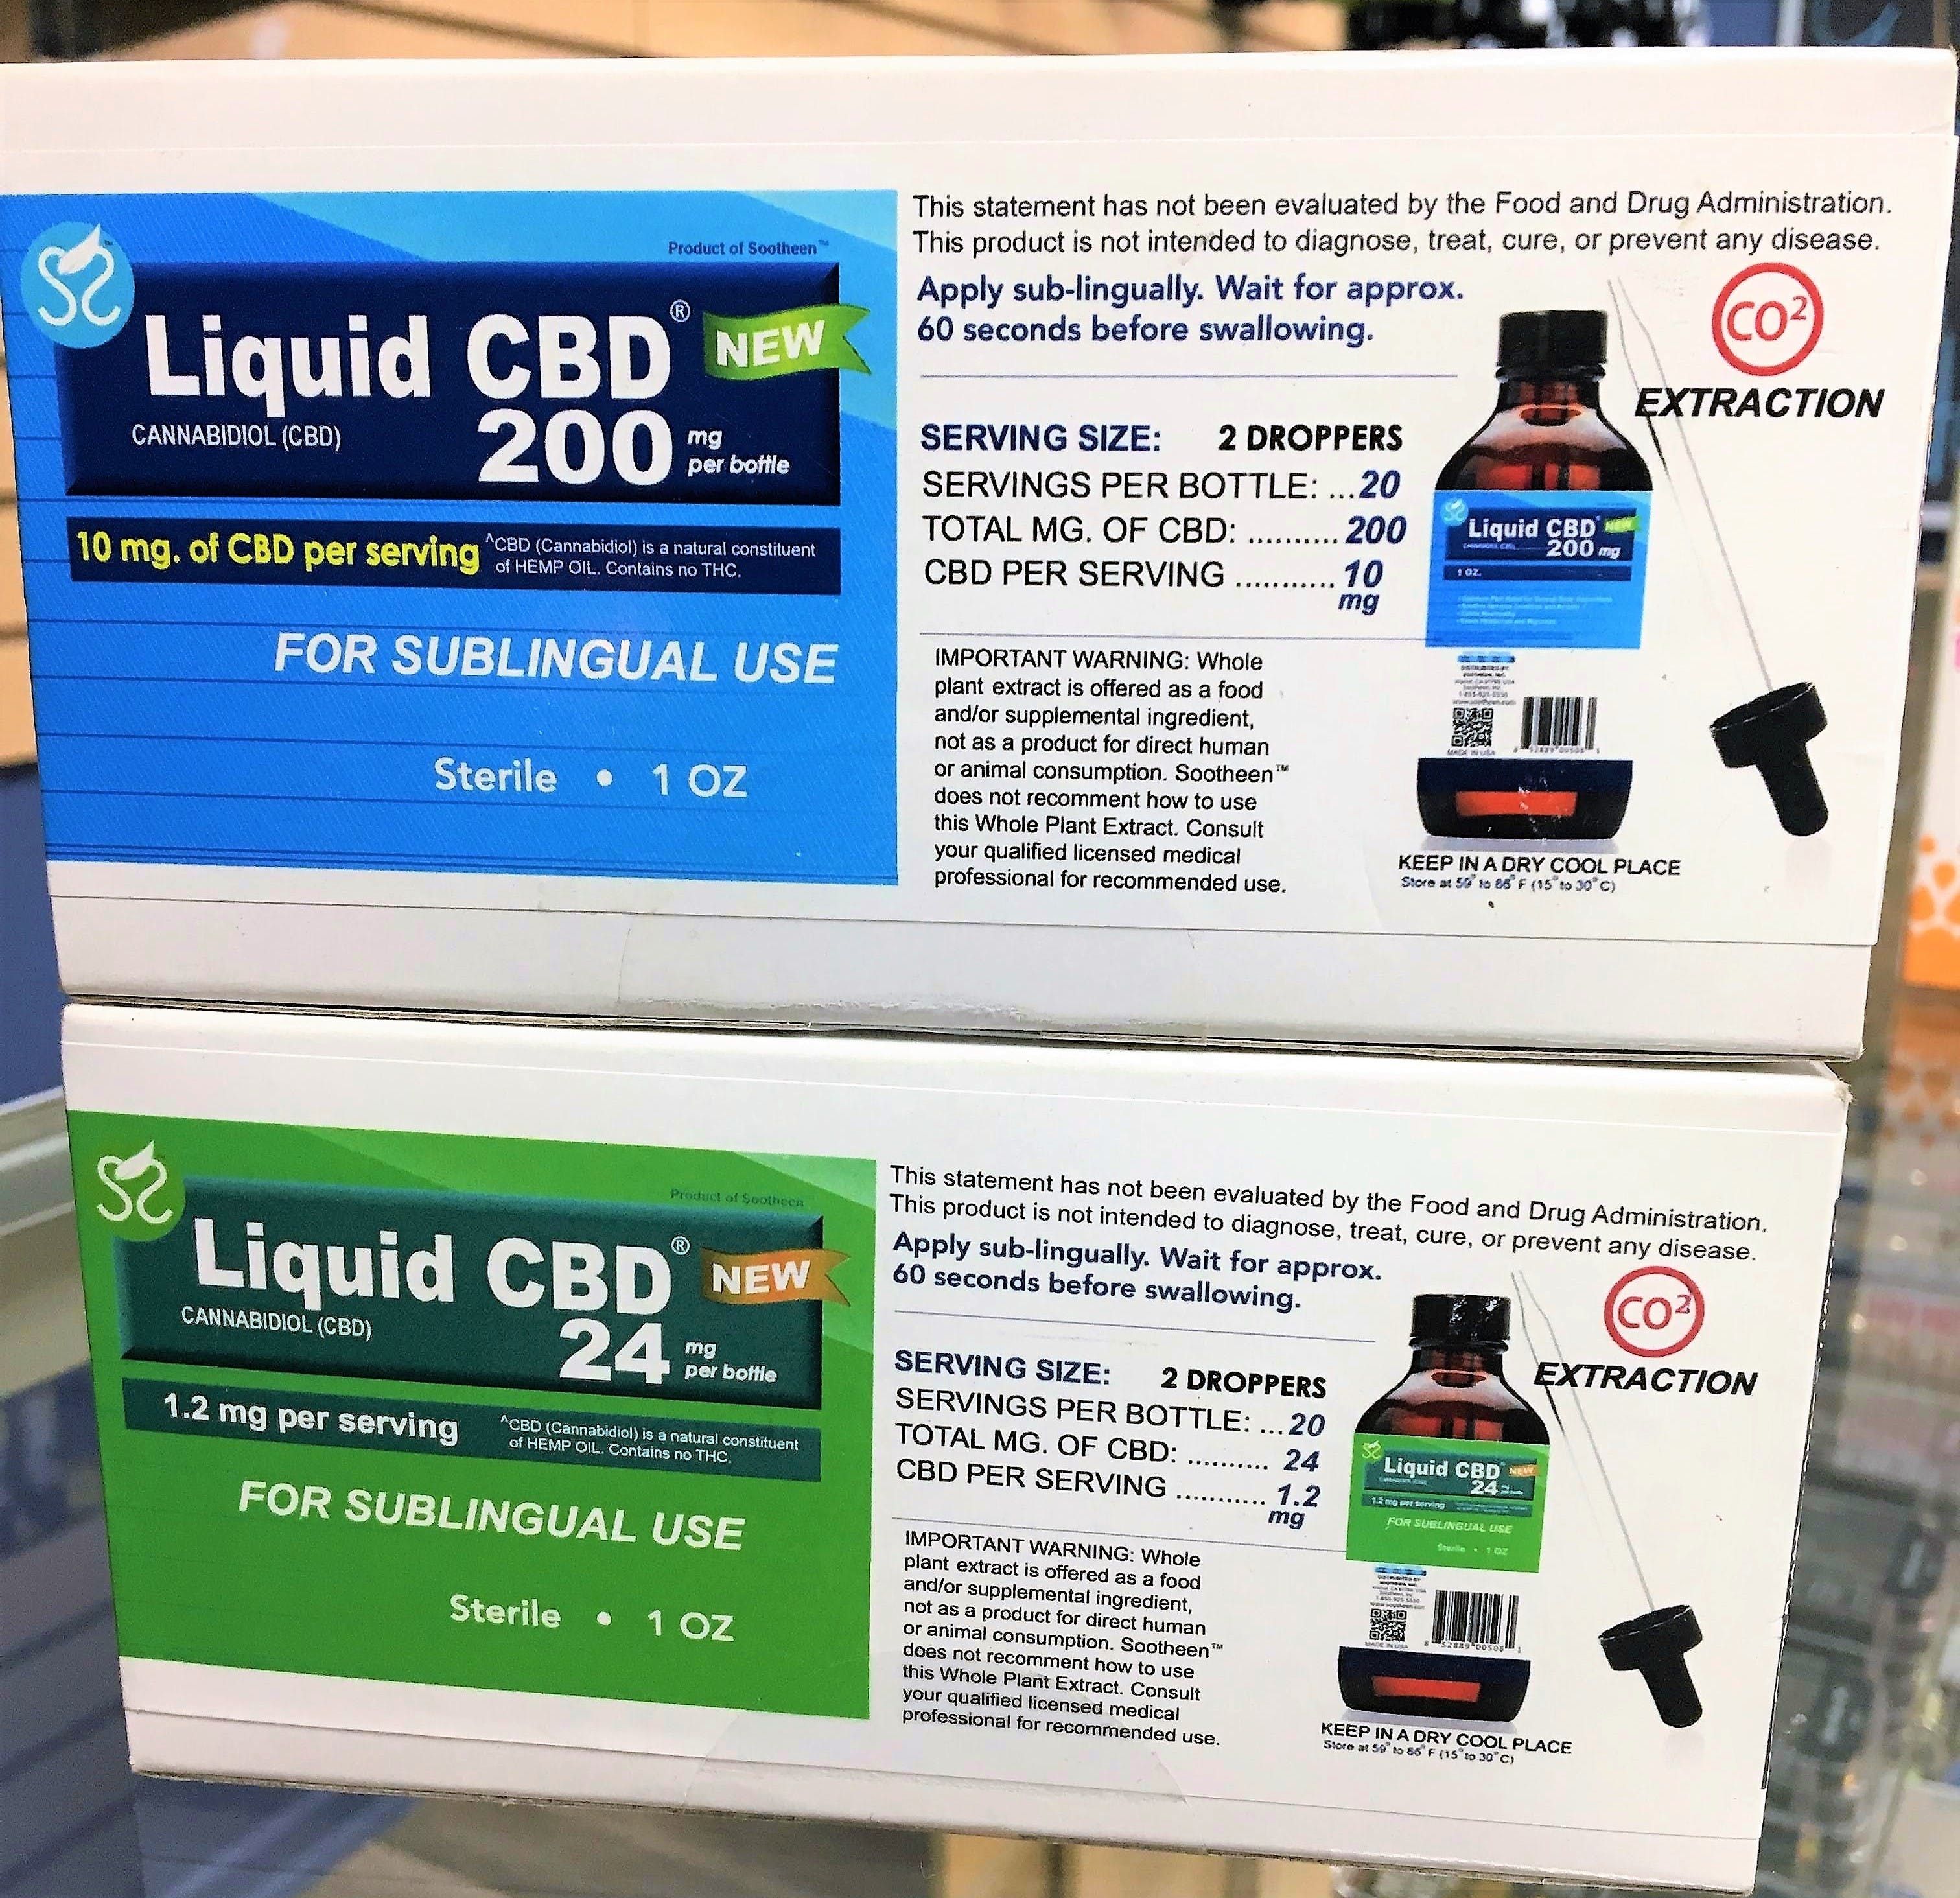 Liquid CBD - 24mg